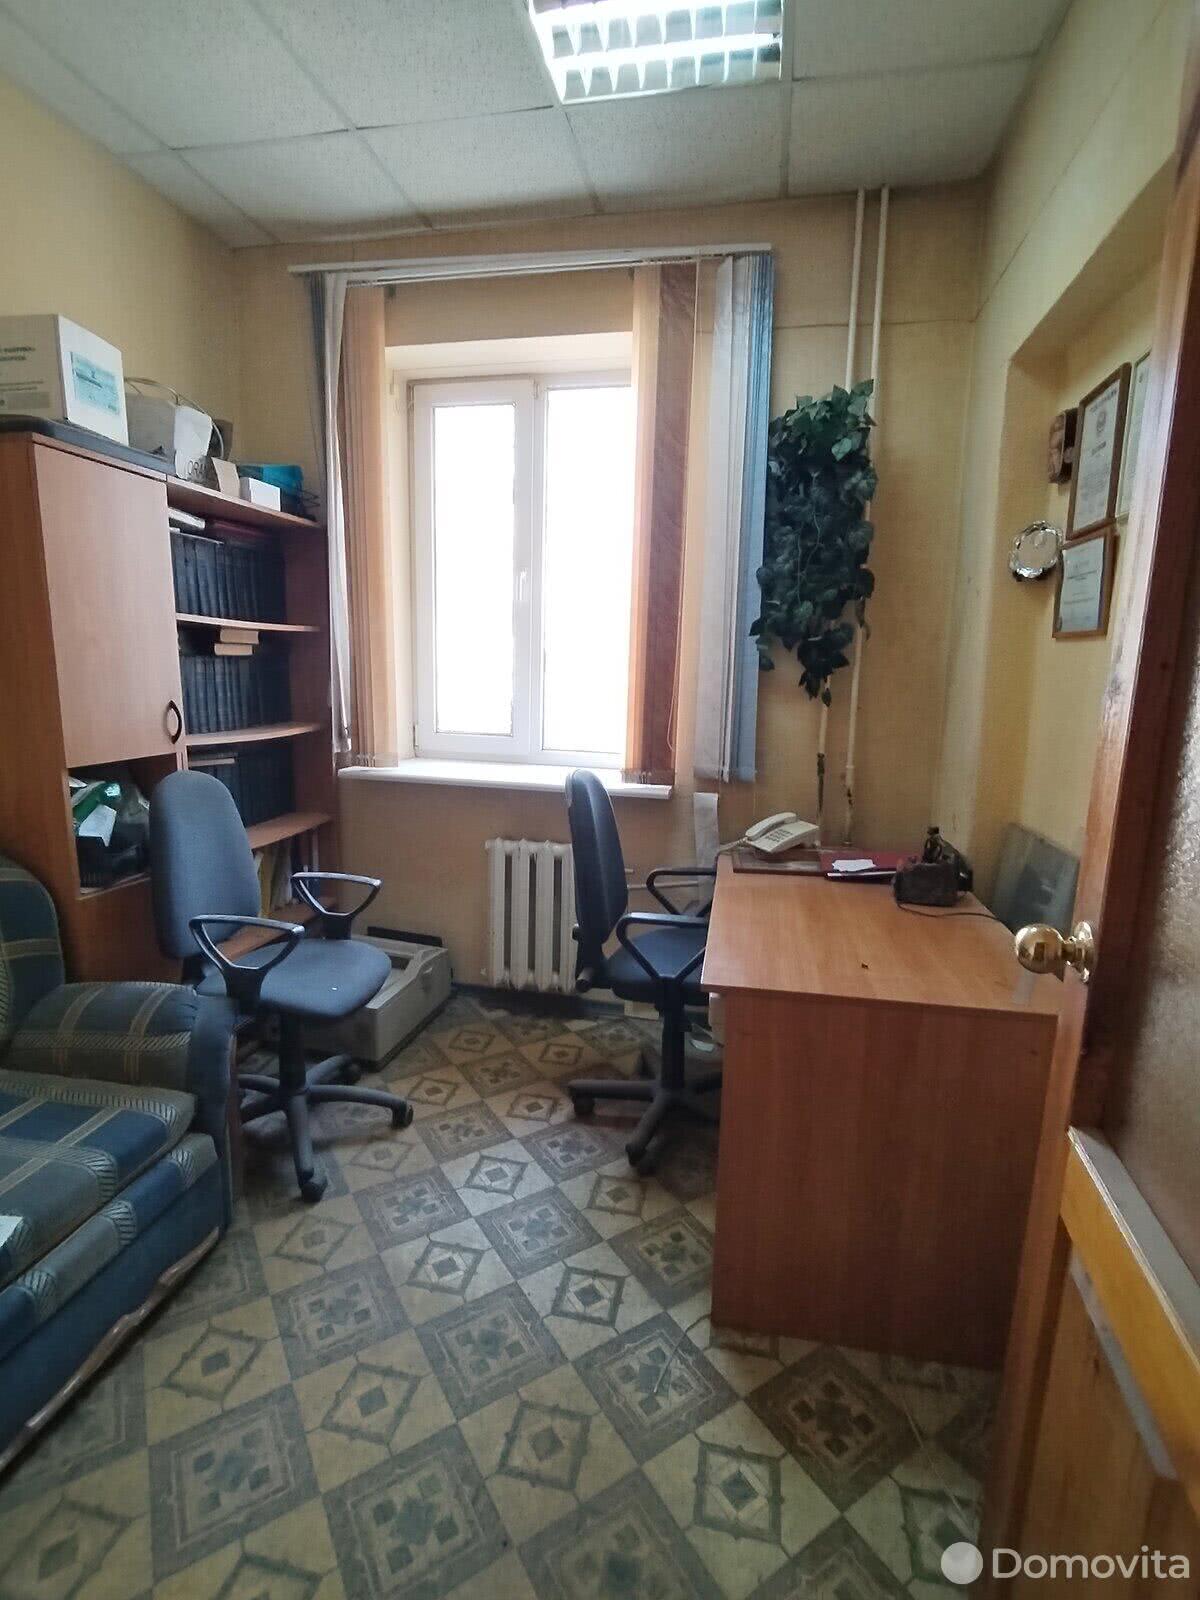 квартира, Борисов, ул. 8 Марта, д. 16, стоимость продажи 139 943 р.